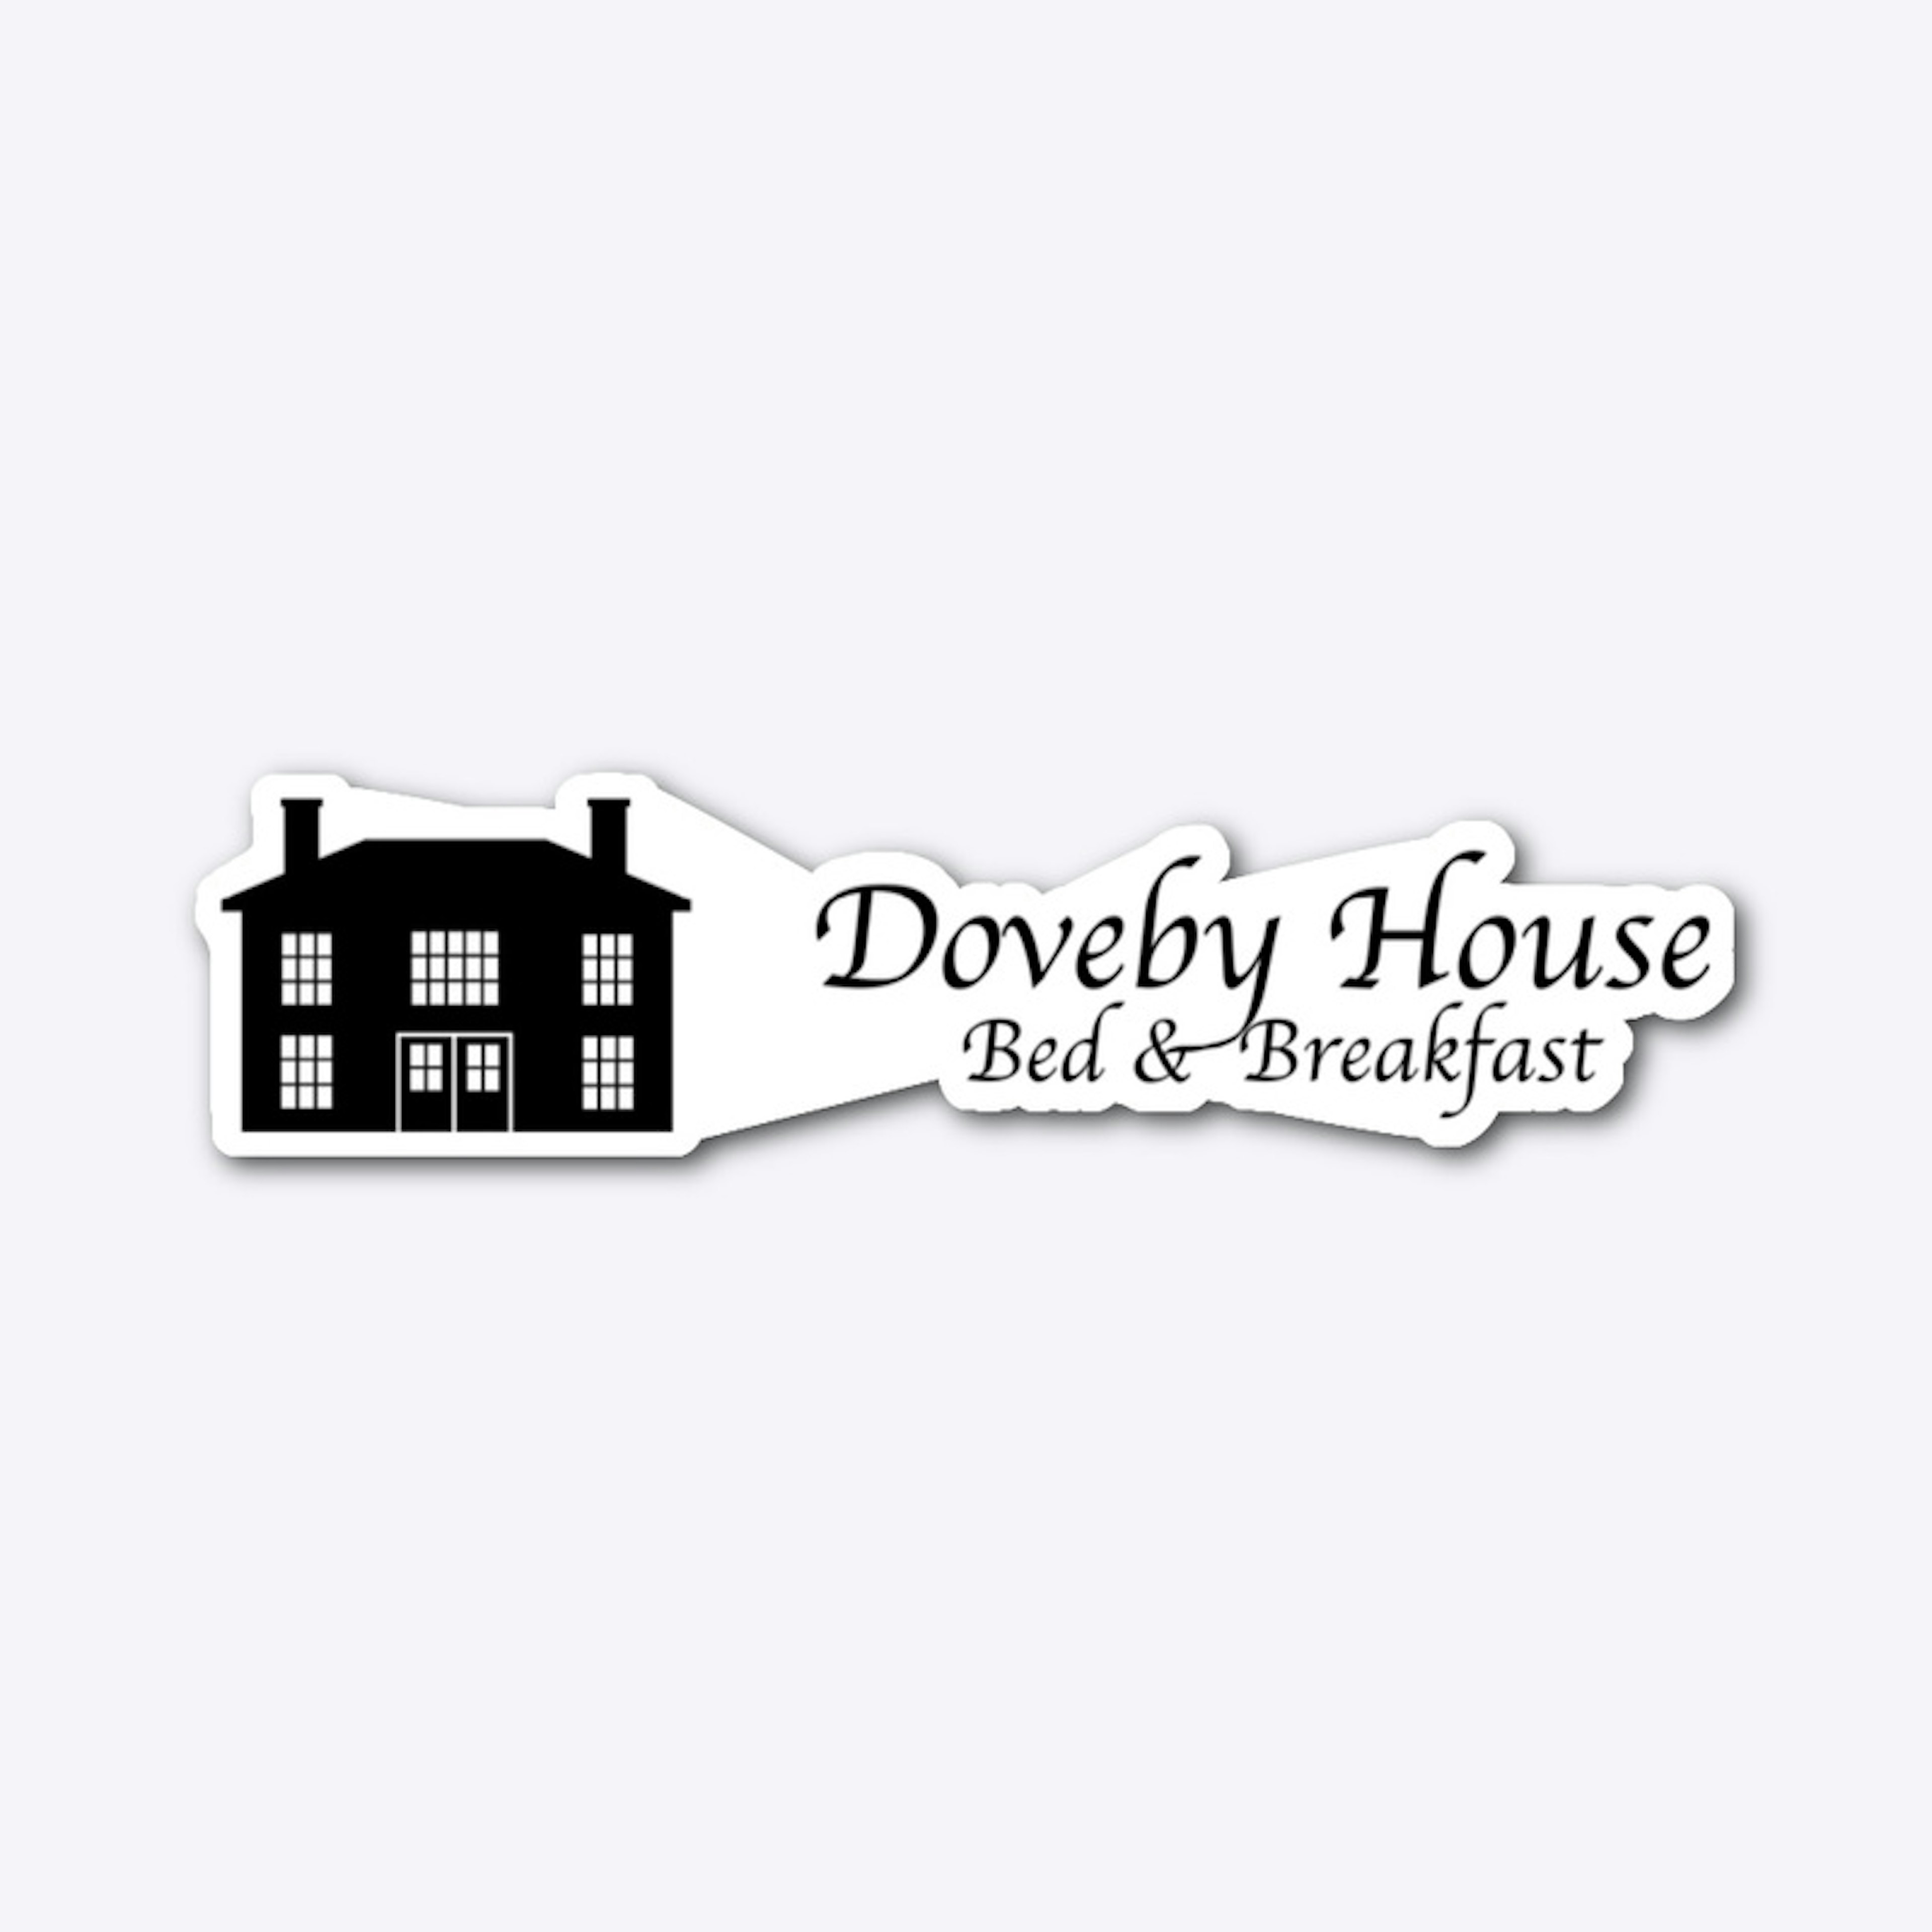 Doveby House - new design - black.